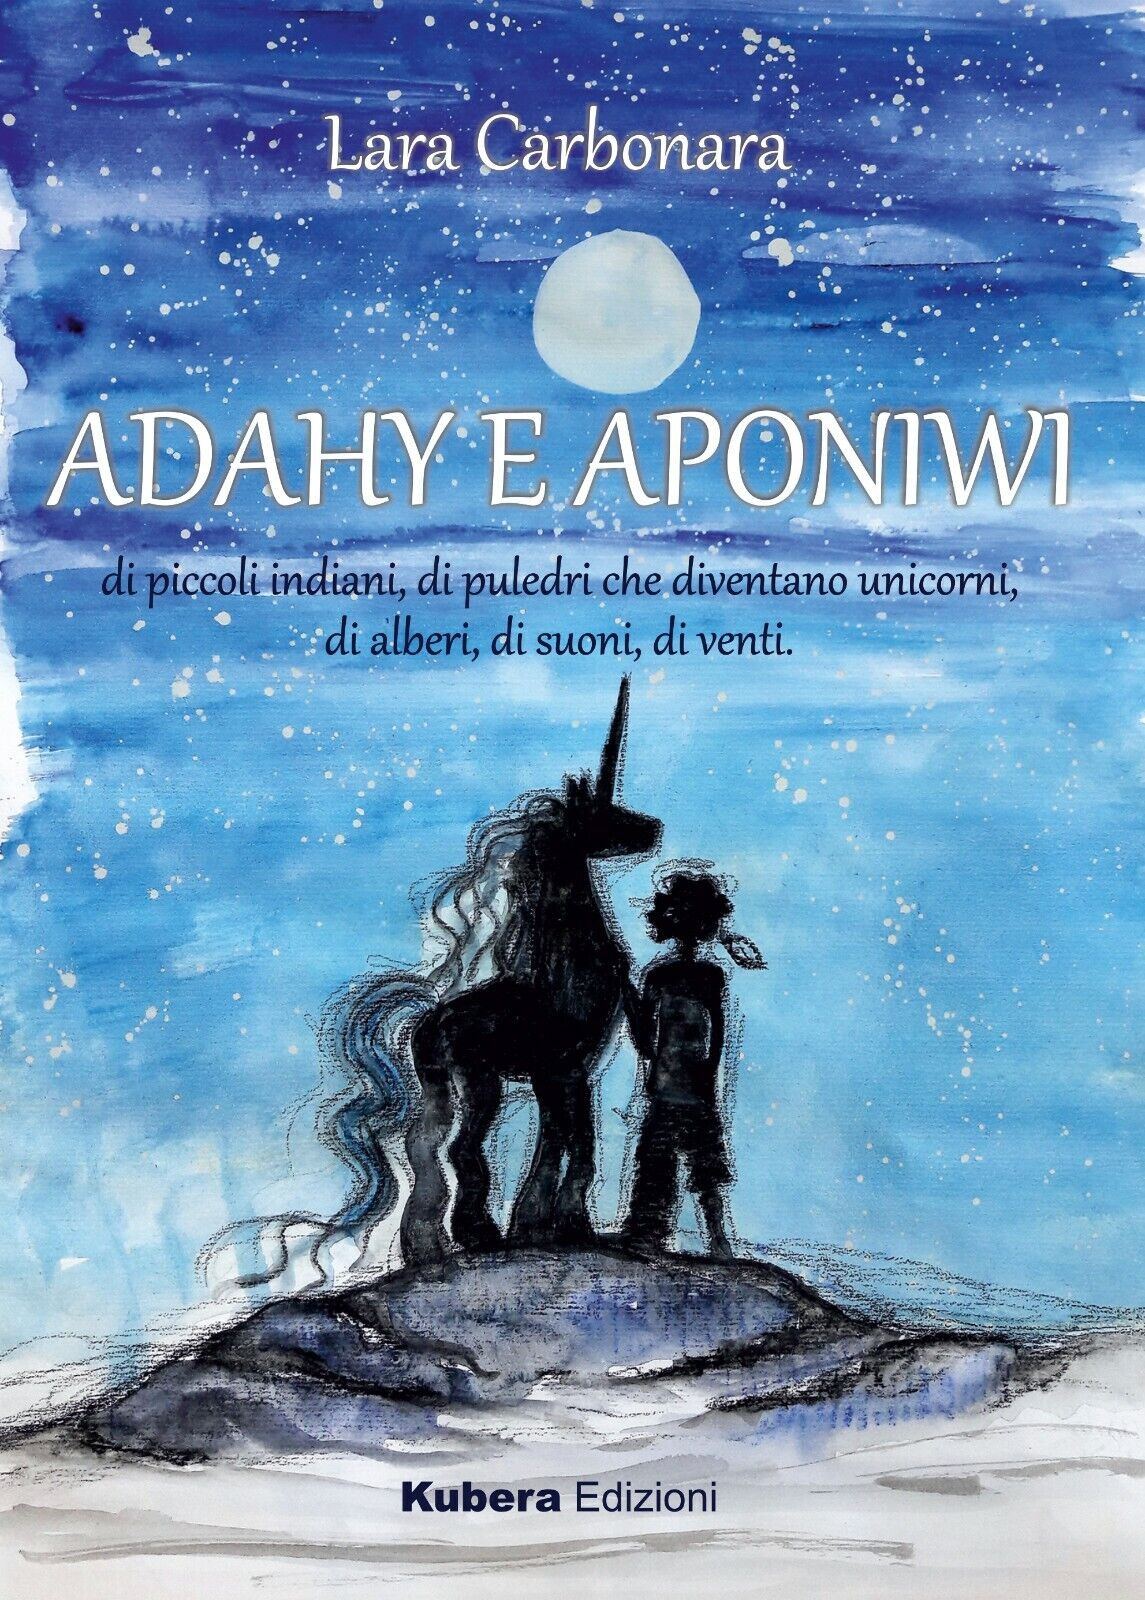   Adahy e Aponiwi - Lara Carbonara,  2019,  Kubera Edizioni